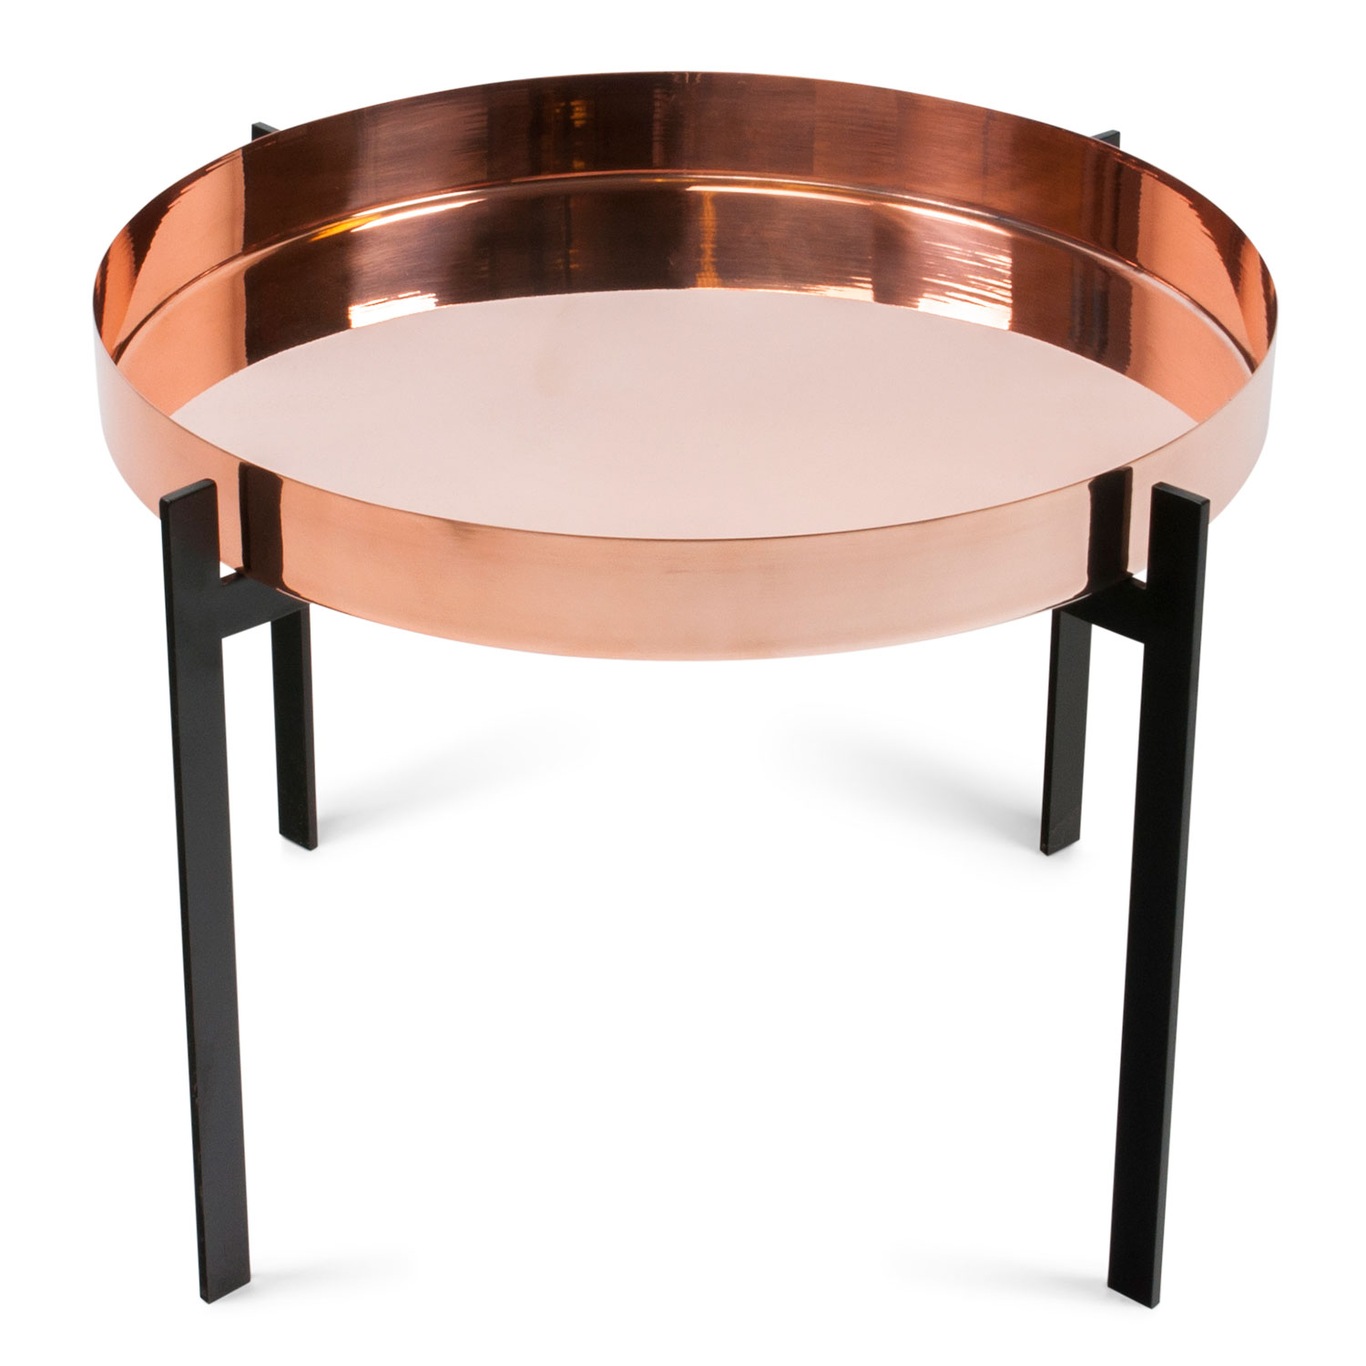 Single Deck Table, Black Base, Copper